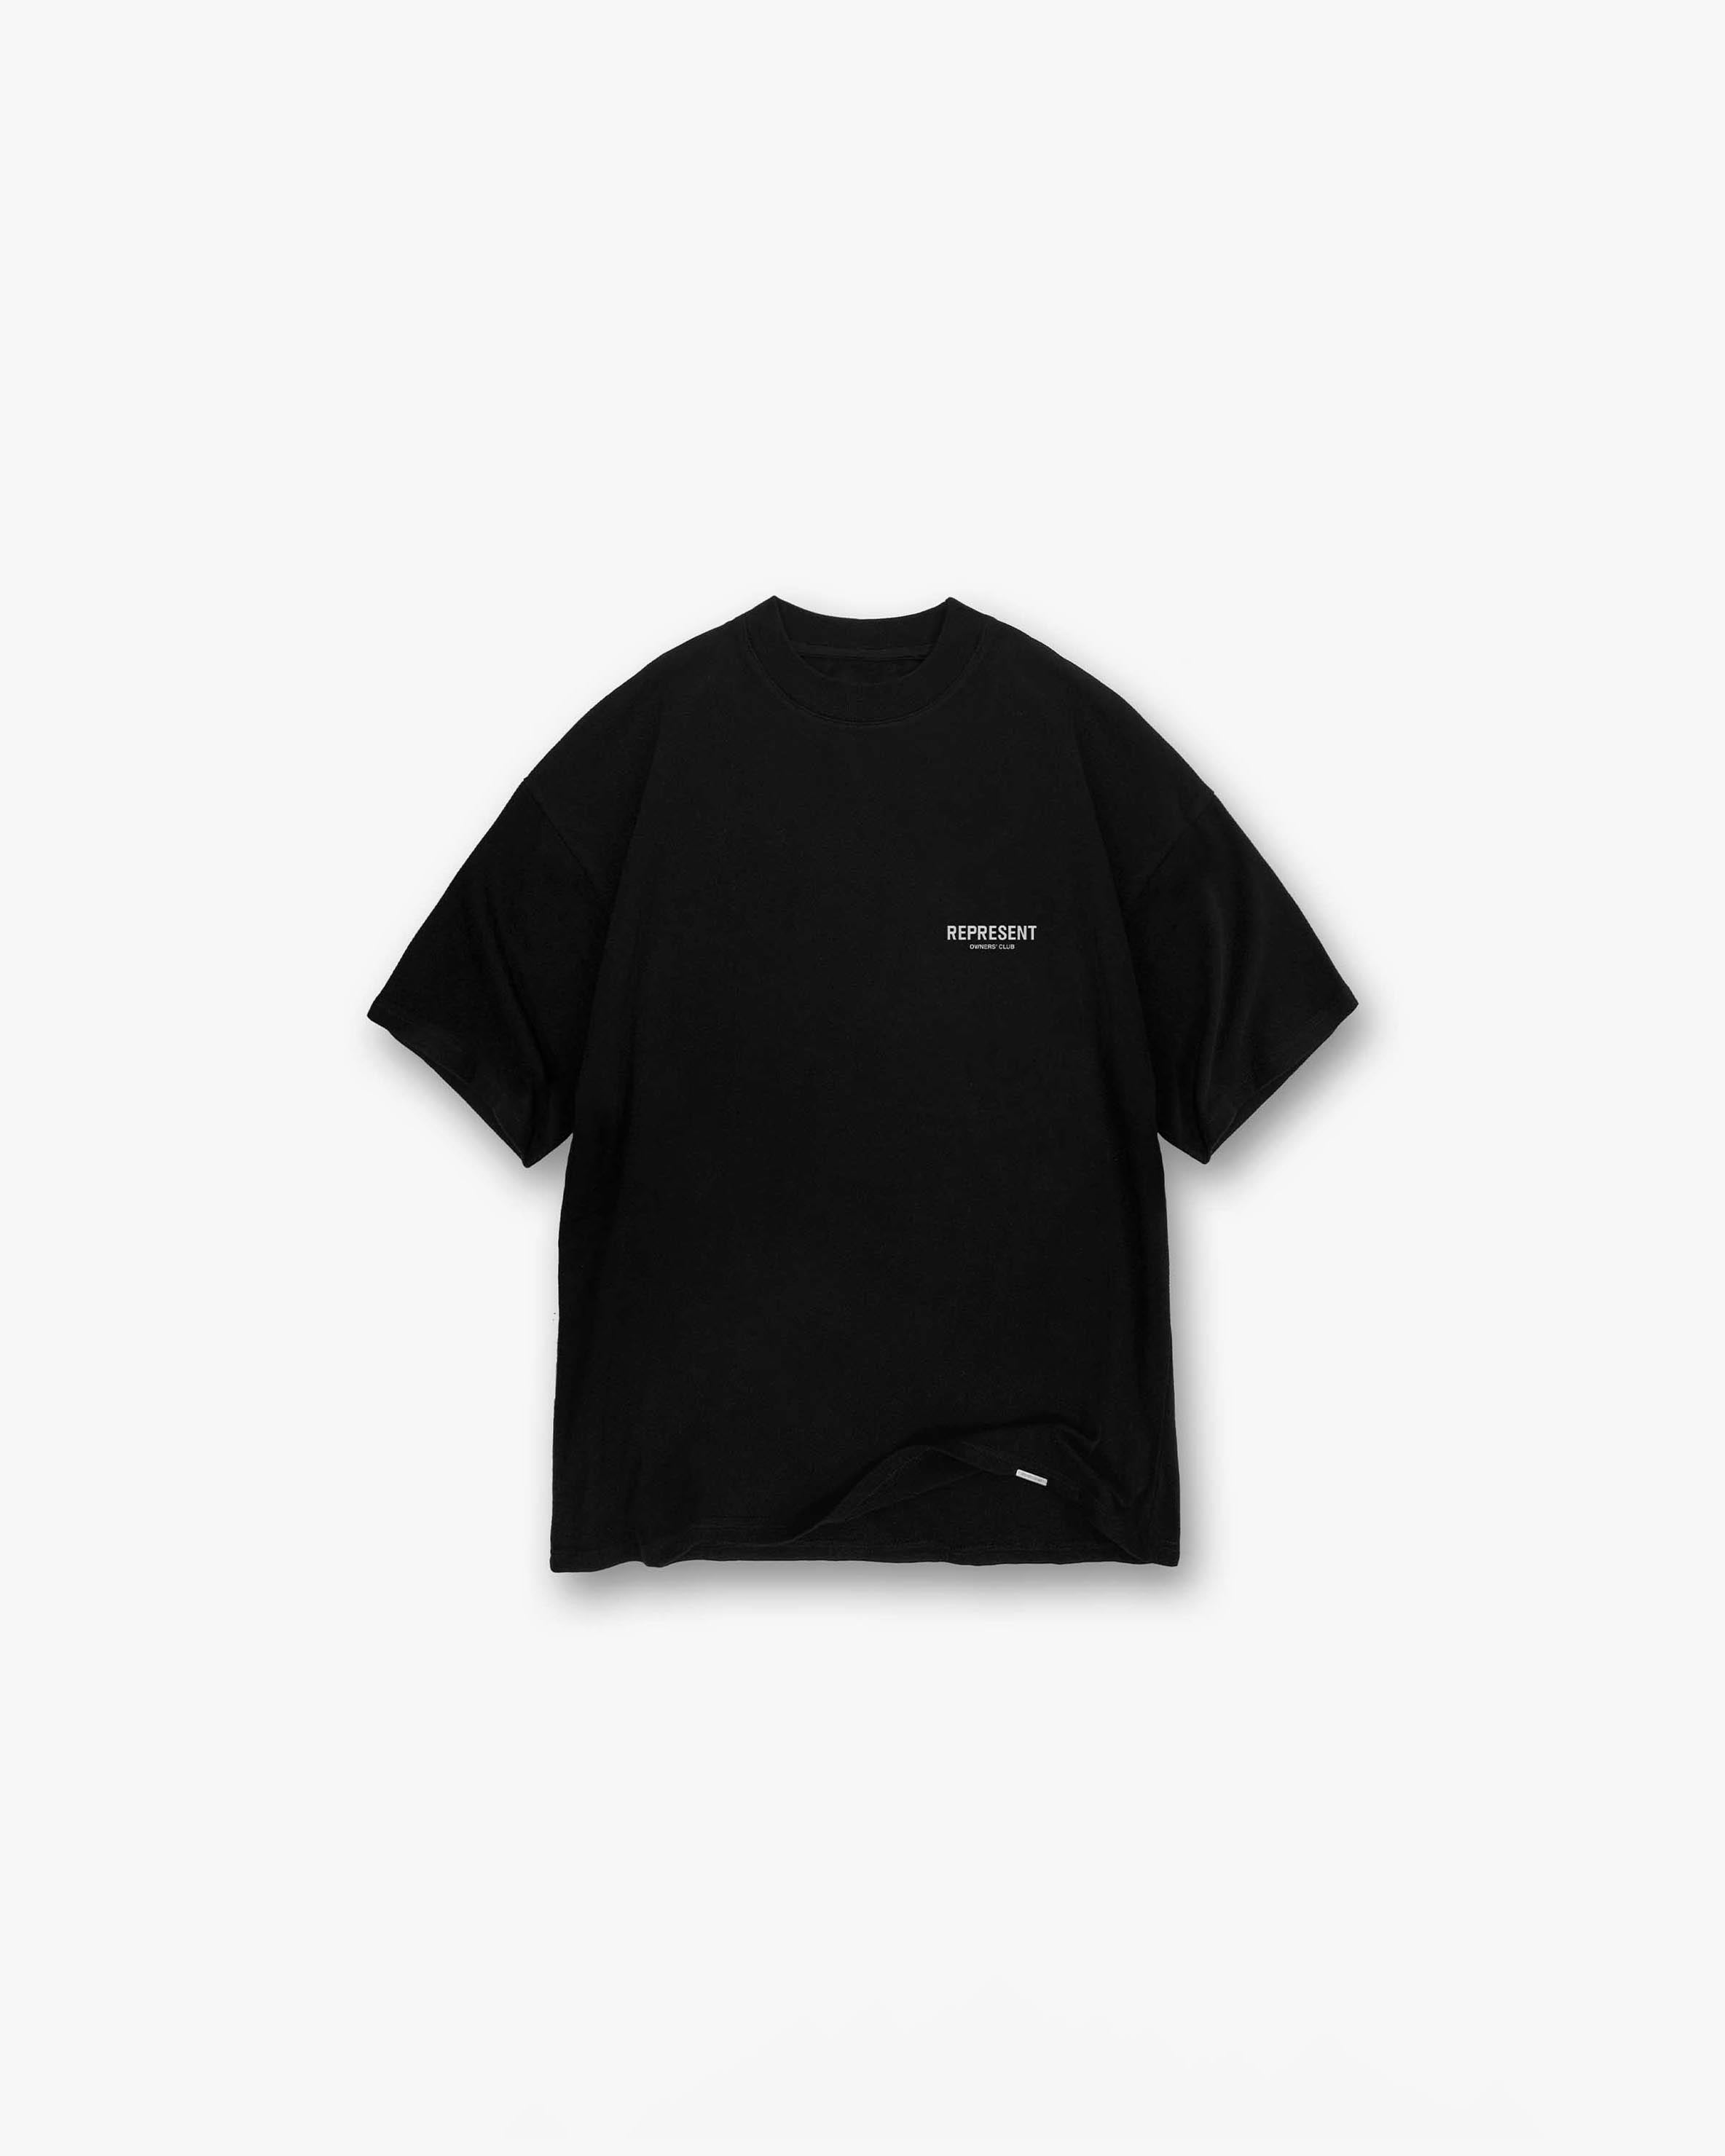 Represent Owners Club T-Shirt - Black